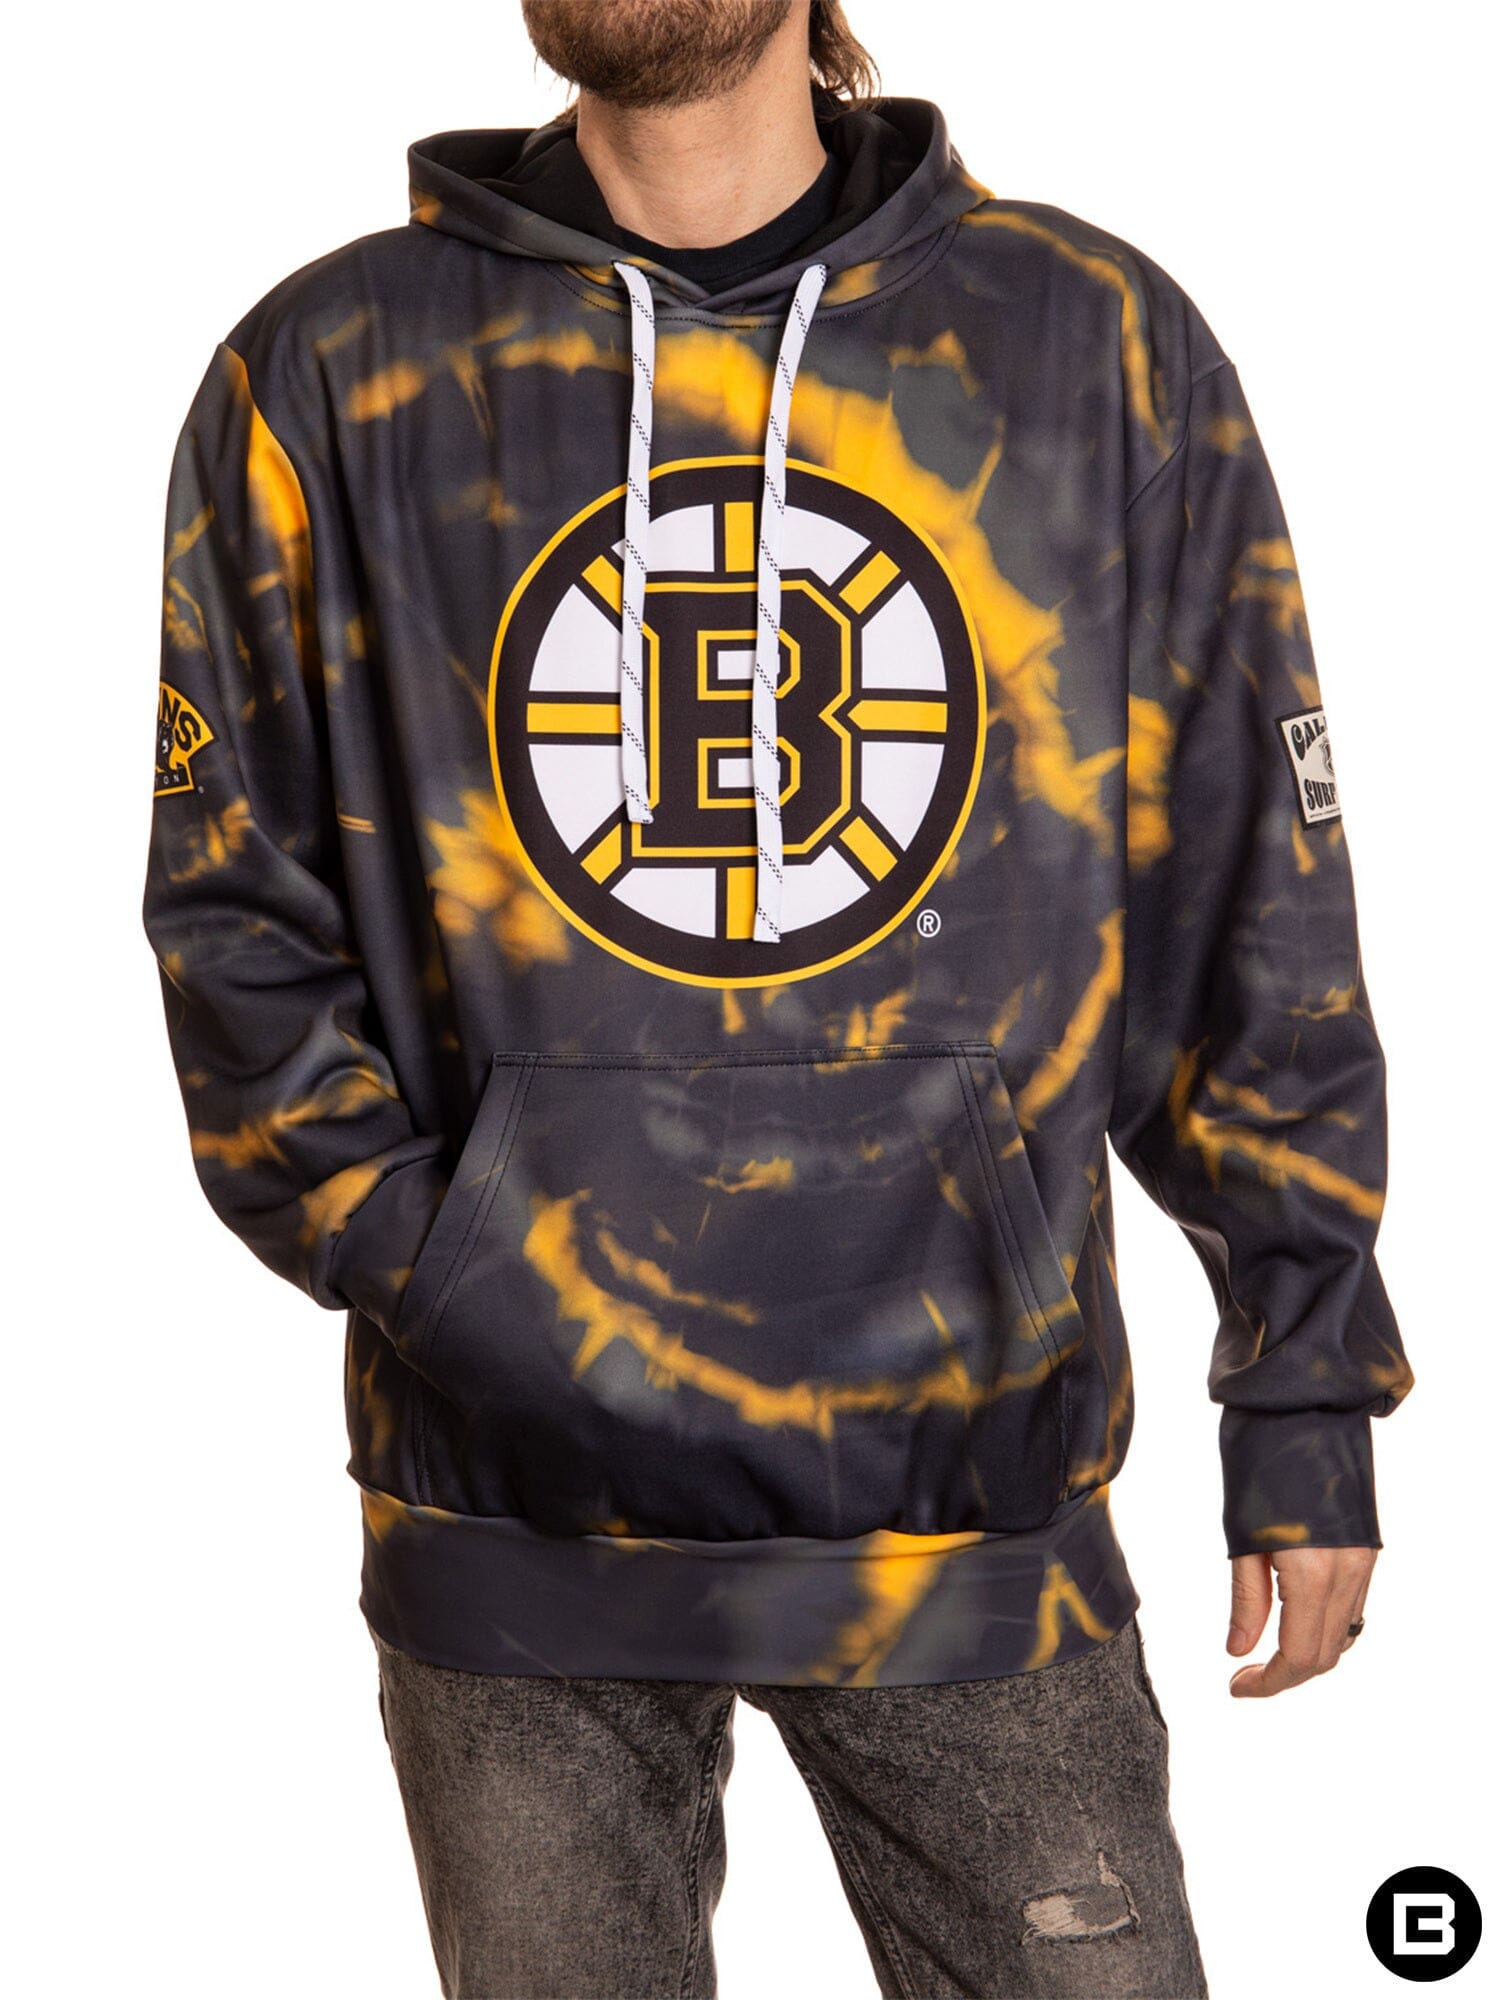 Oficial Boston bruins 2023 winter classic shirt, hoodie